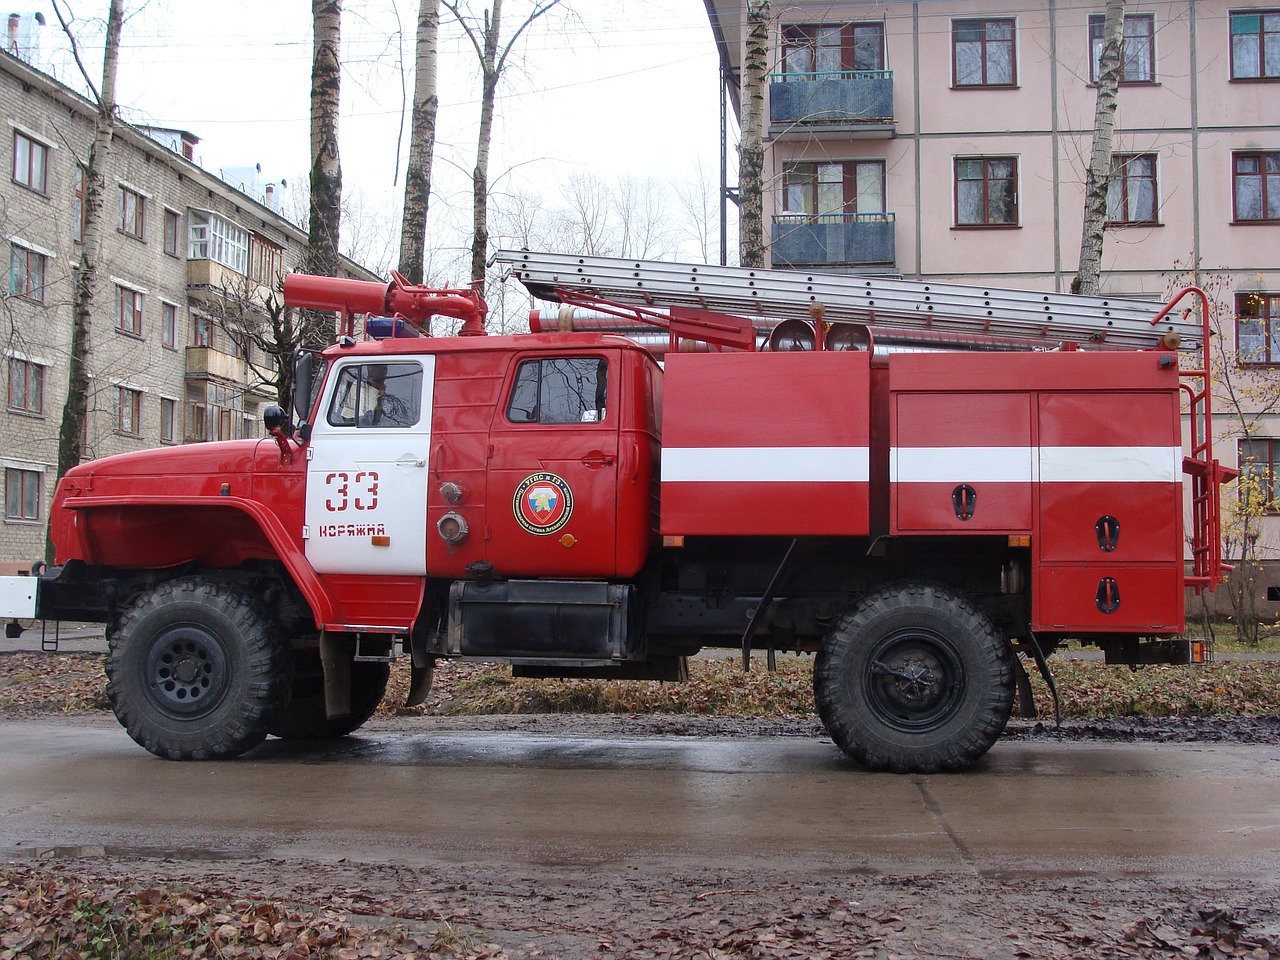 koryazhma firefighter truck free photo